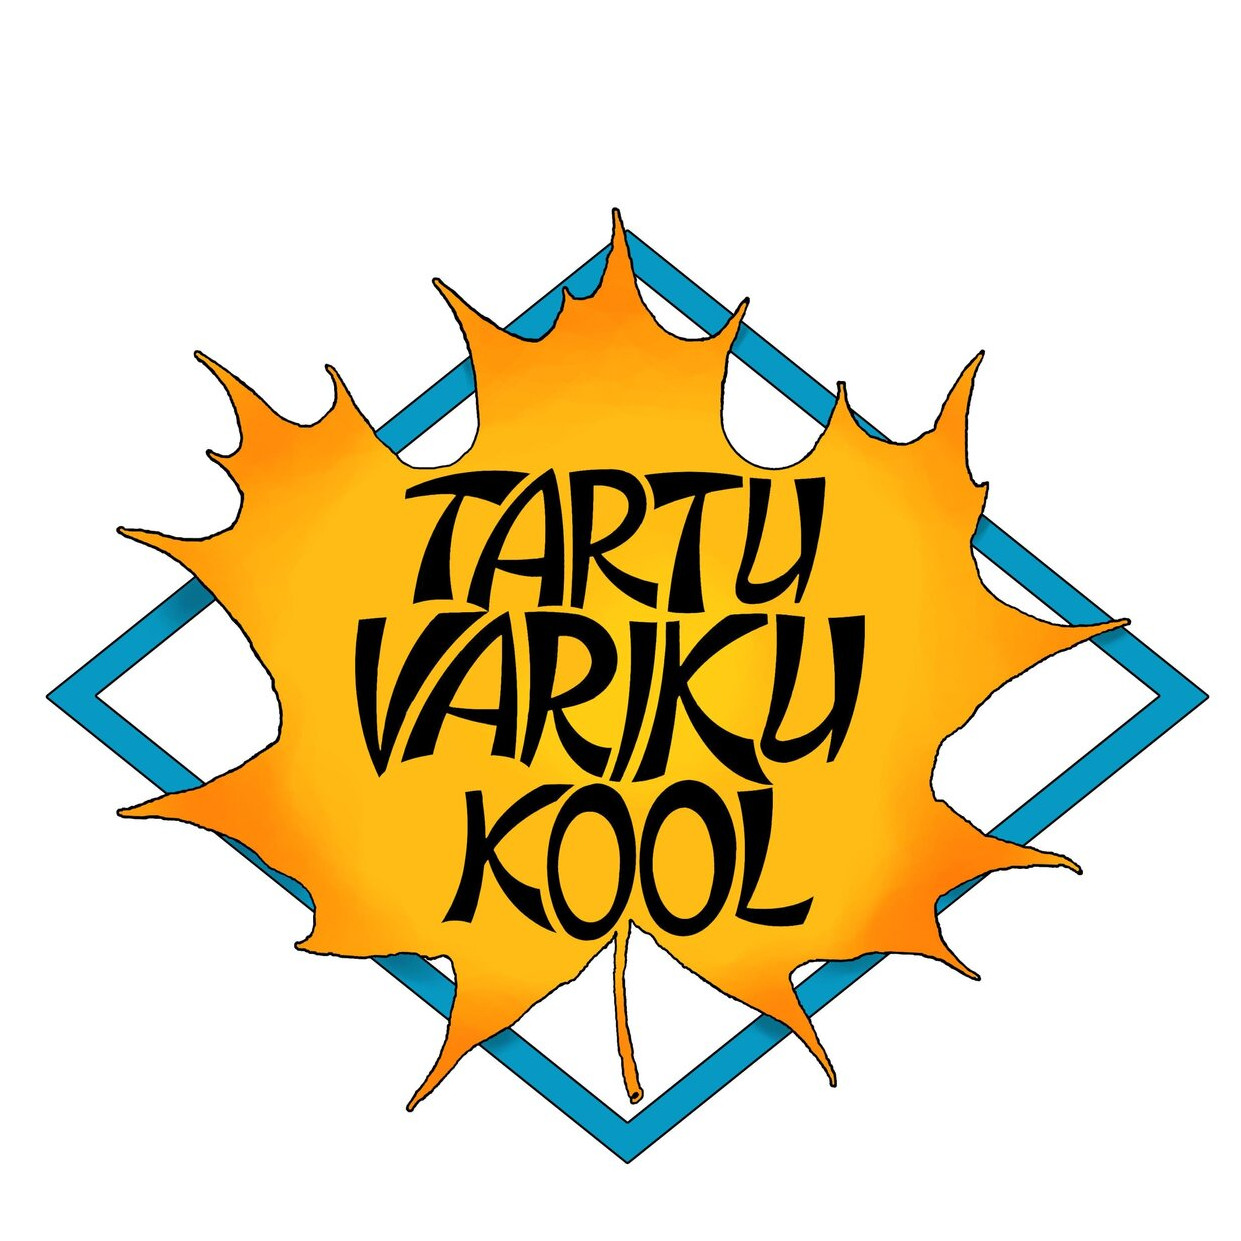 TARTU VARIKU KOOL logo